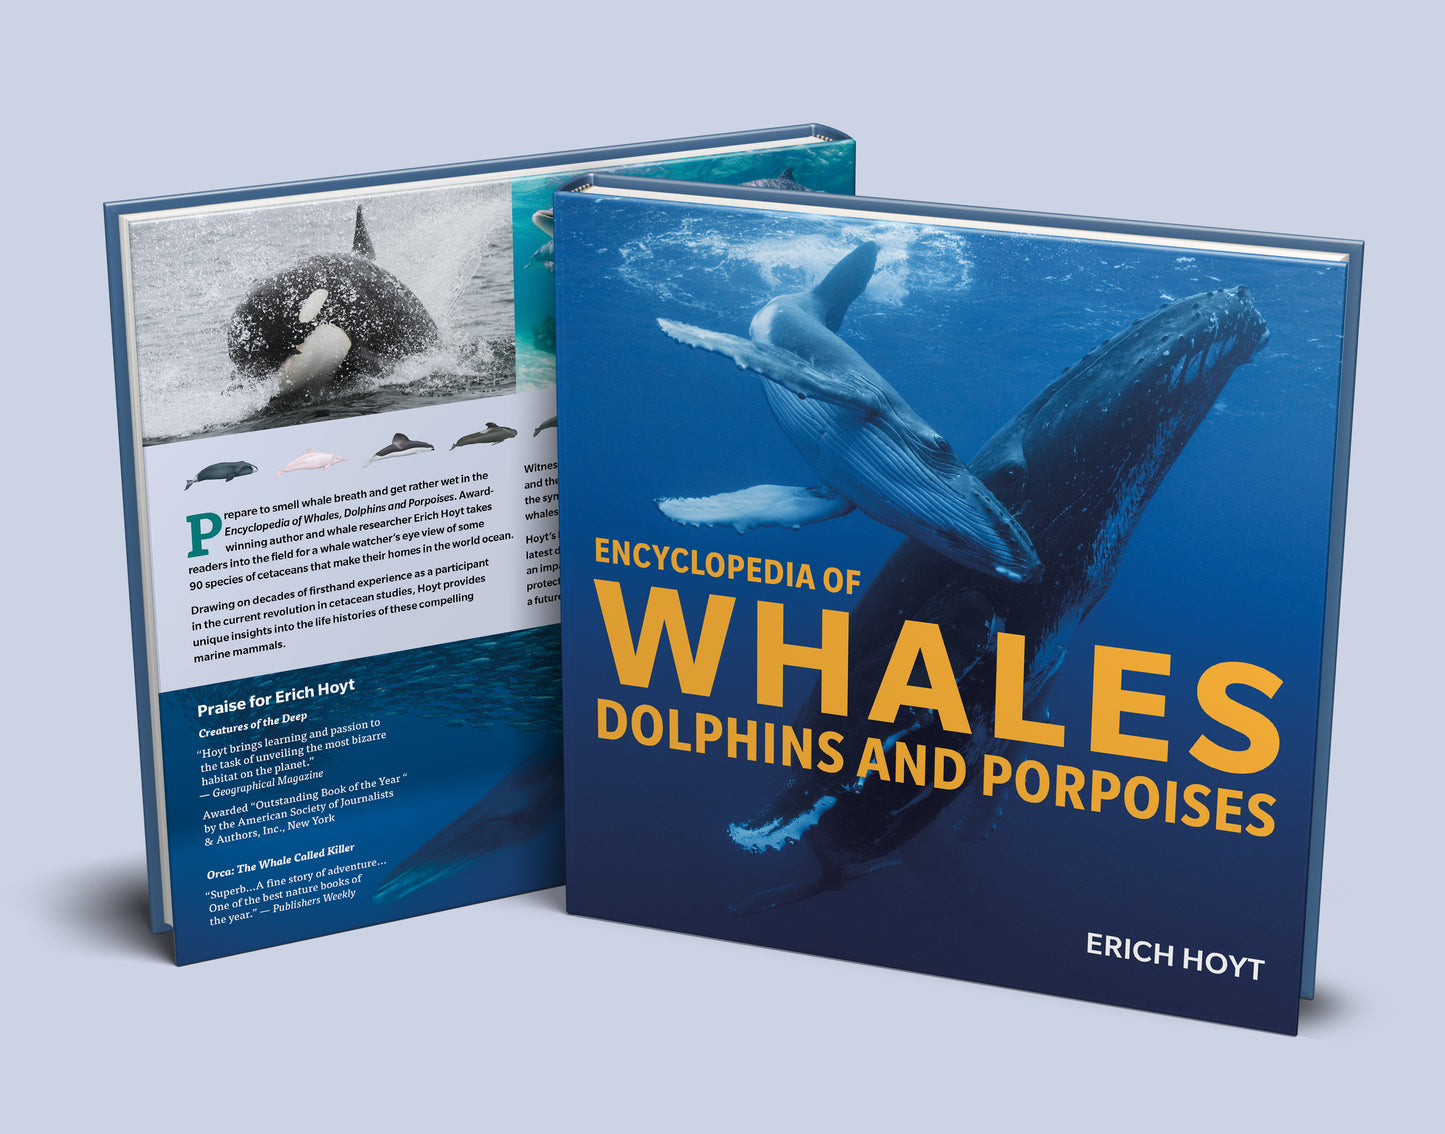 Encyclopedia of Whales-Dolphins-Porpoises